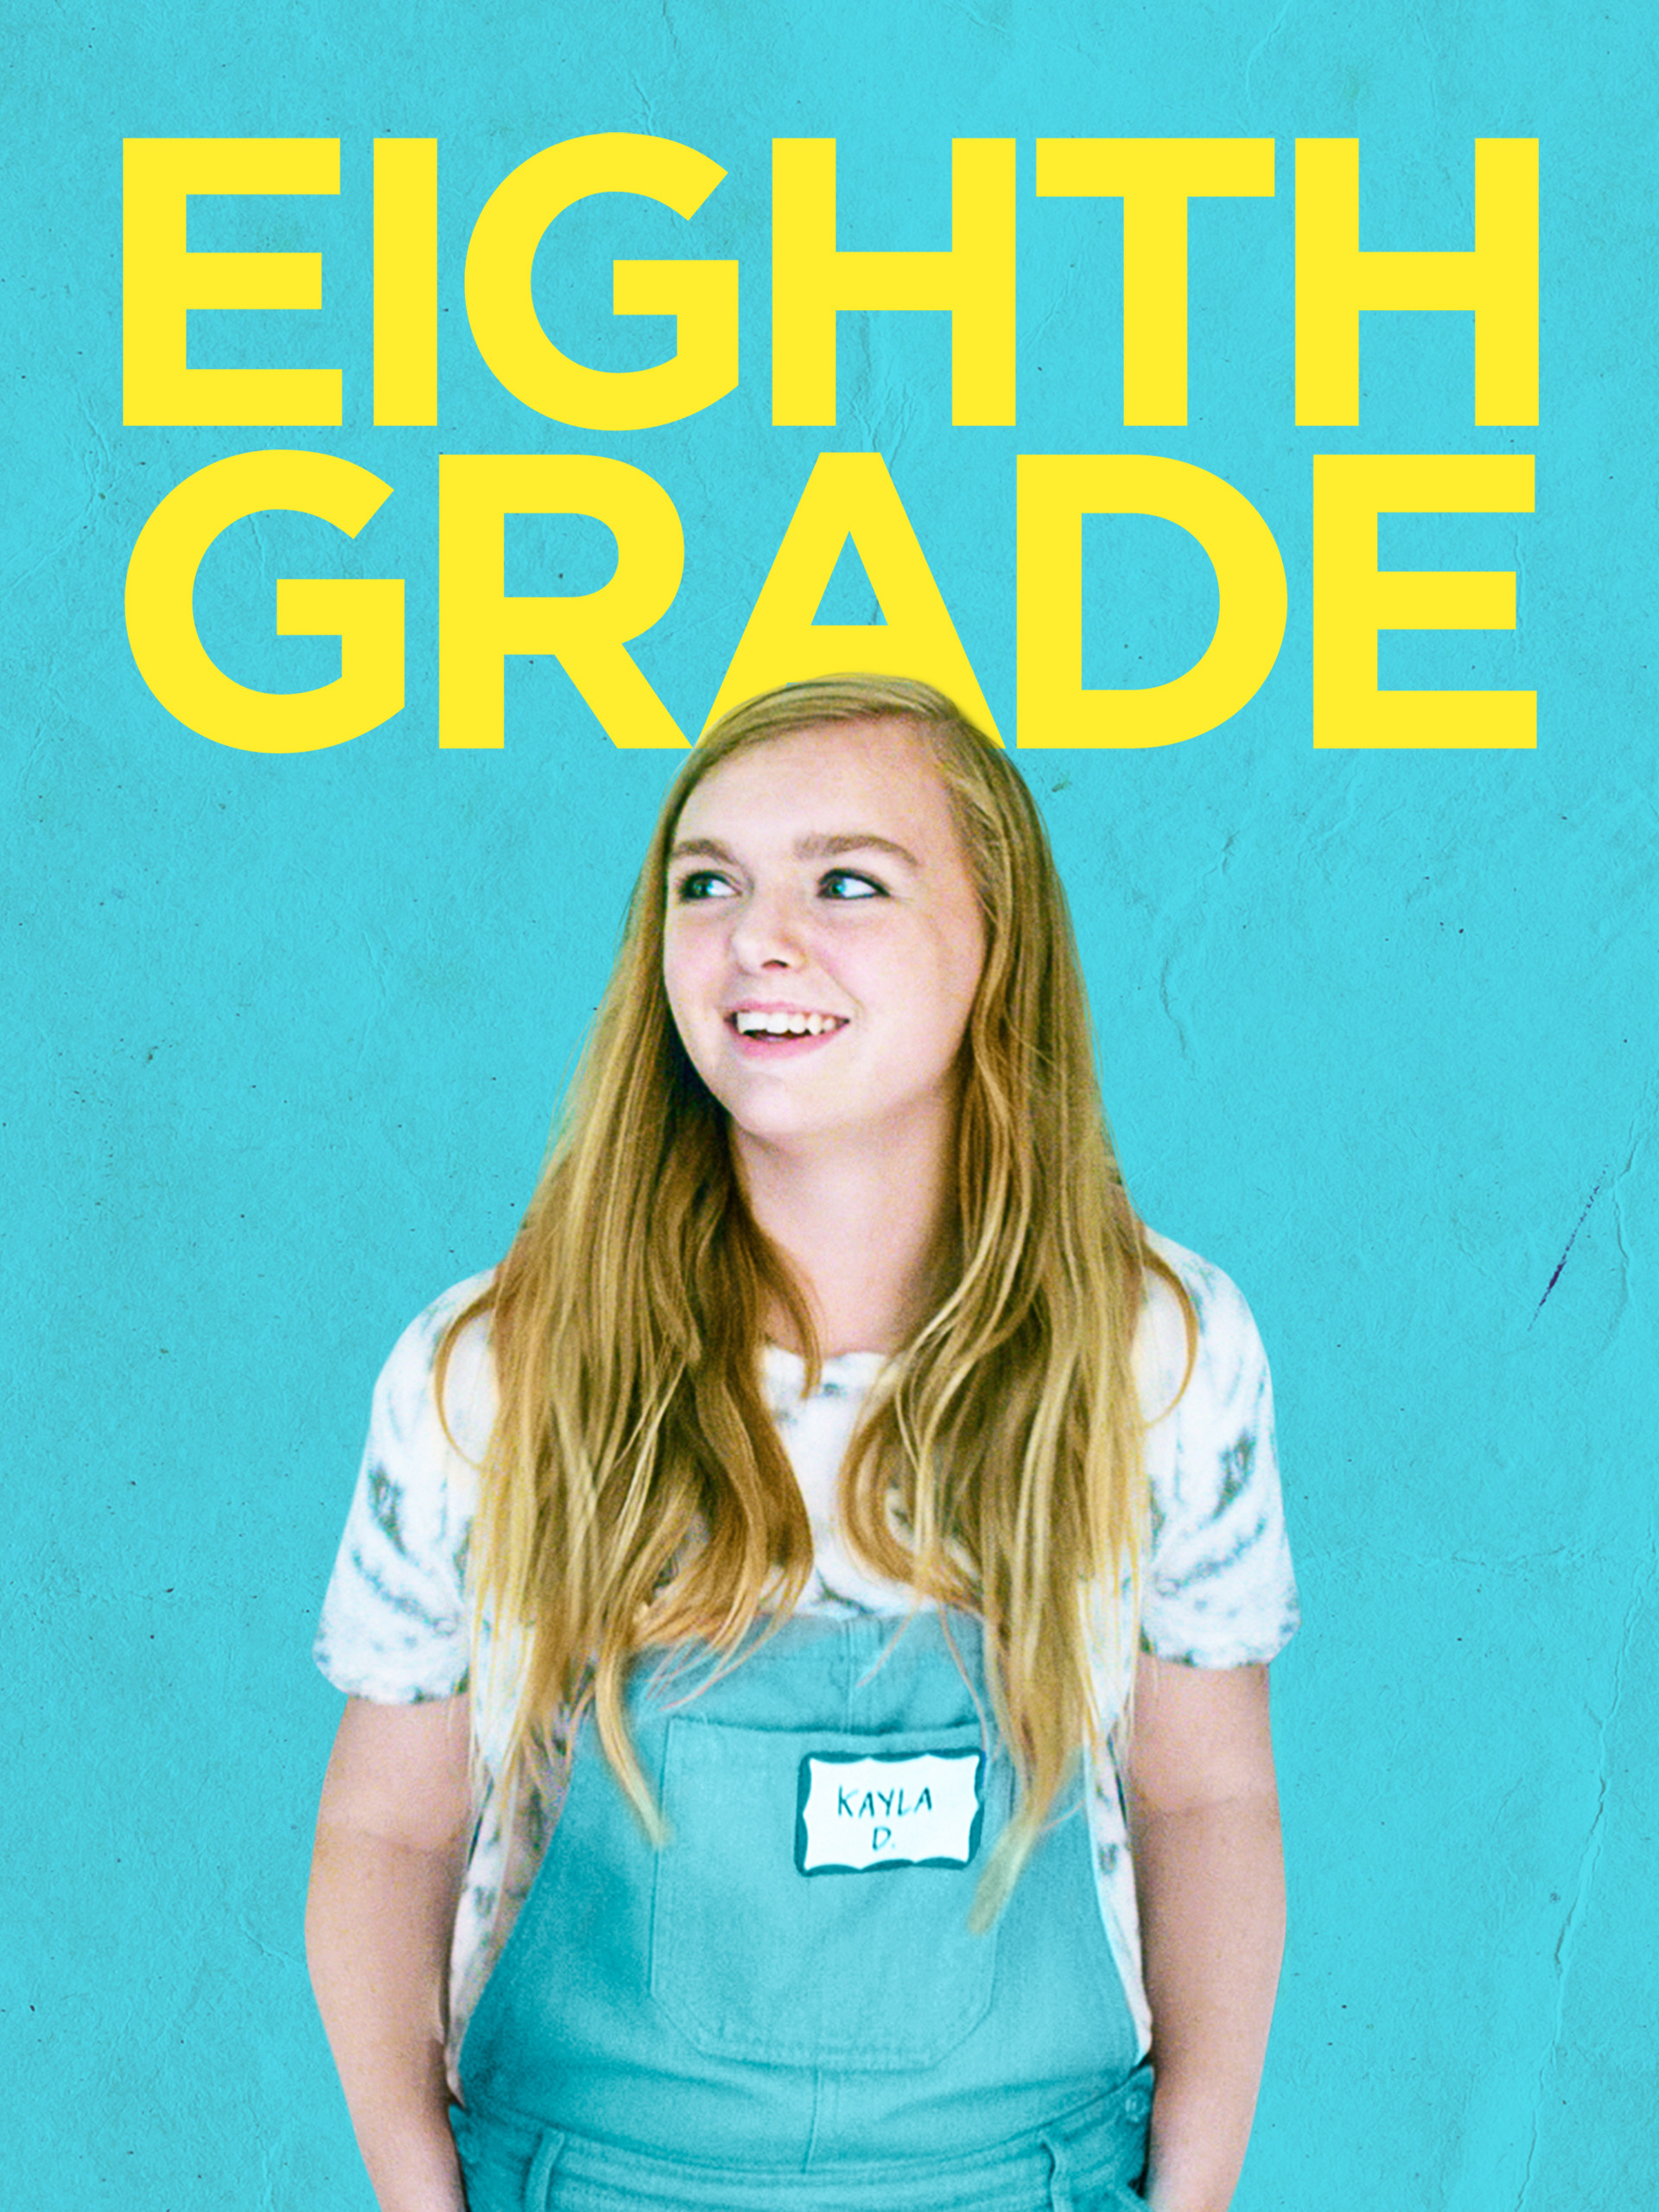 Cover of Eighth Grade movie Amazon Prime